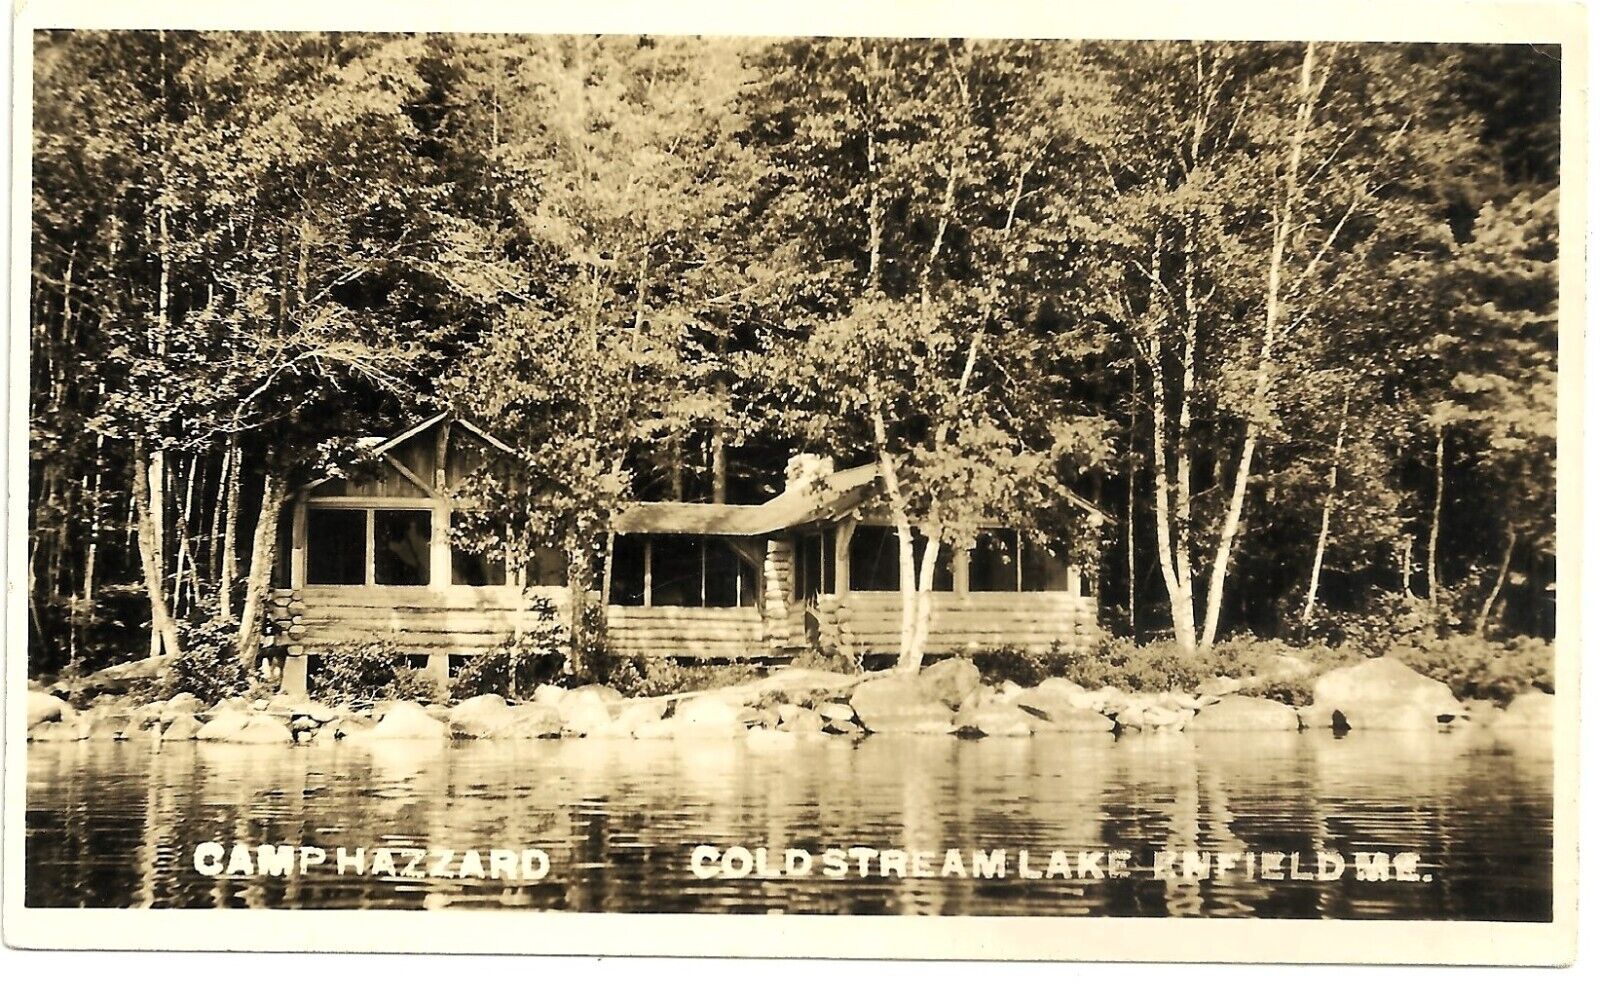 Enfield, Maine realphoto: Cold Stream Lake, Camp Hazzard, ca 1930